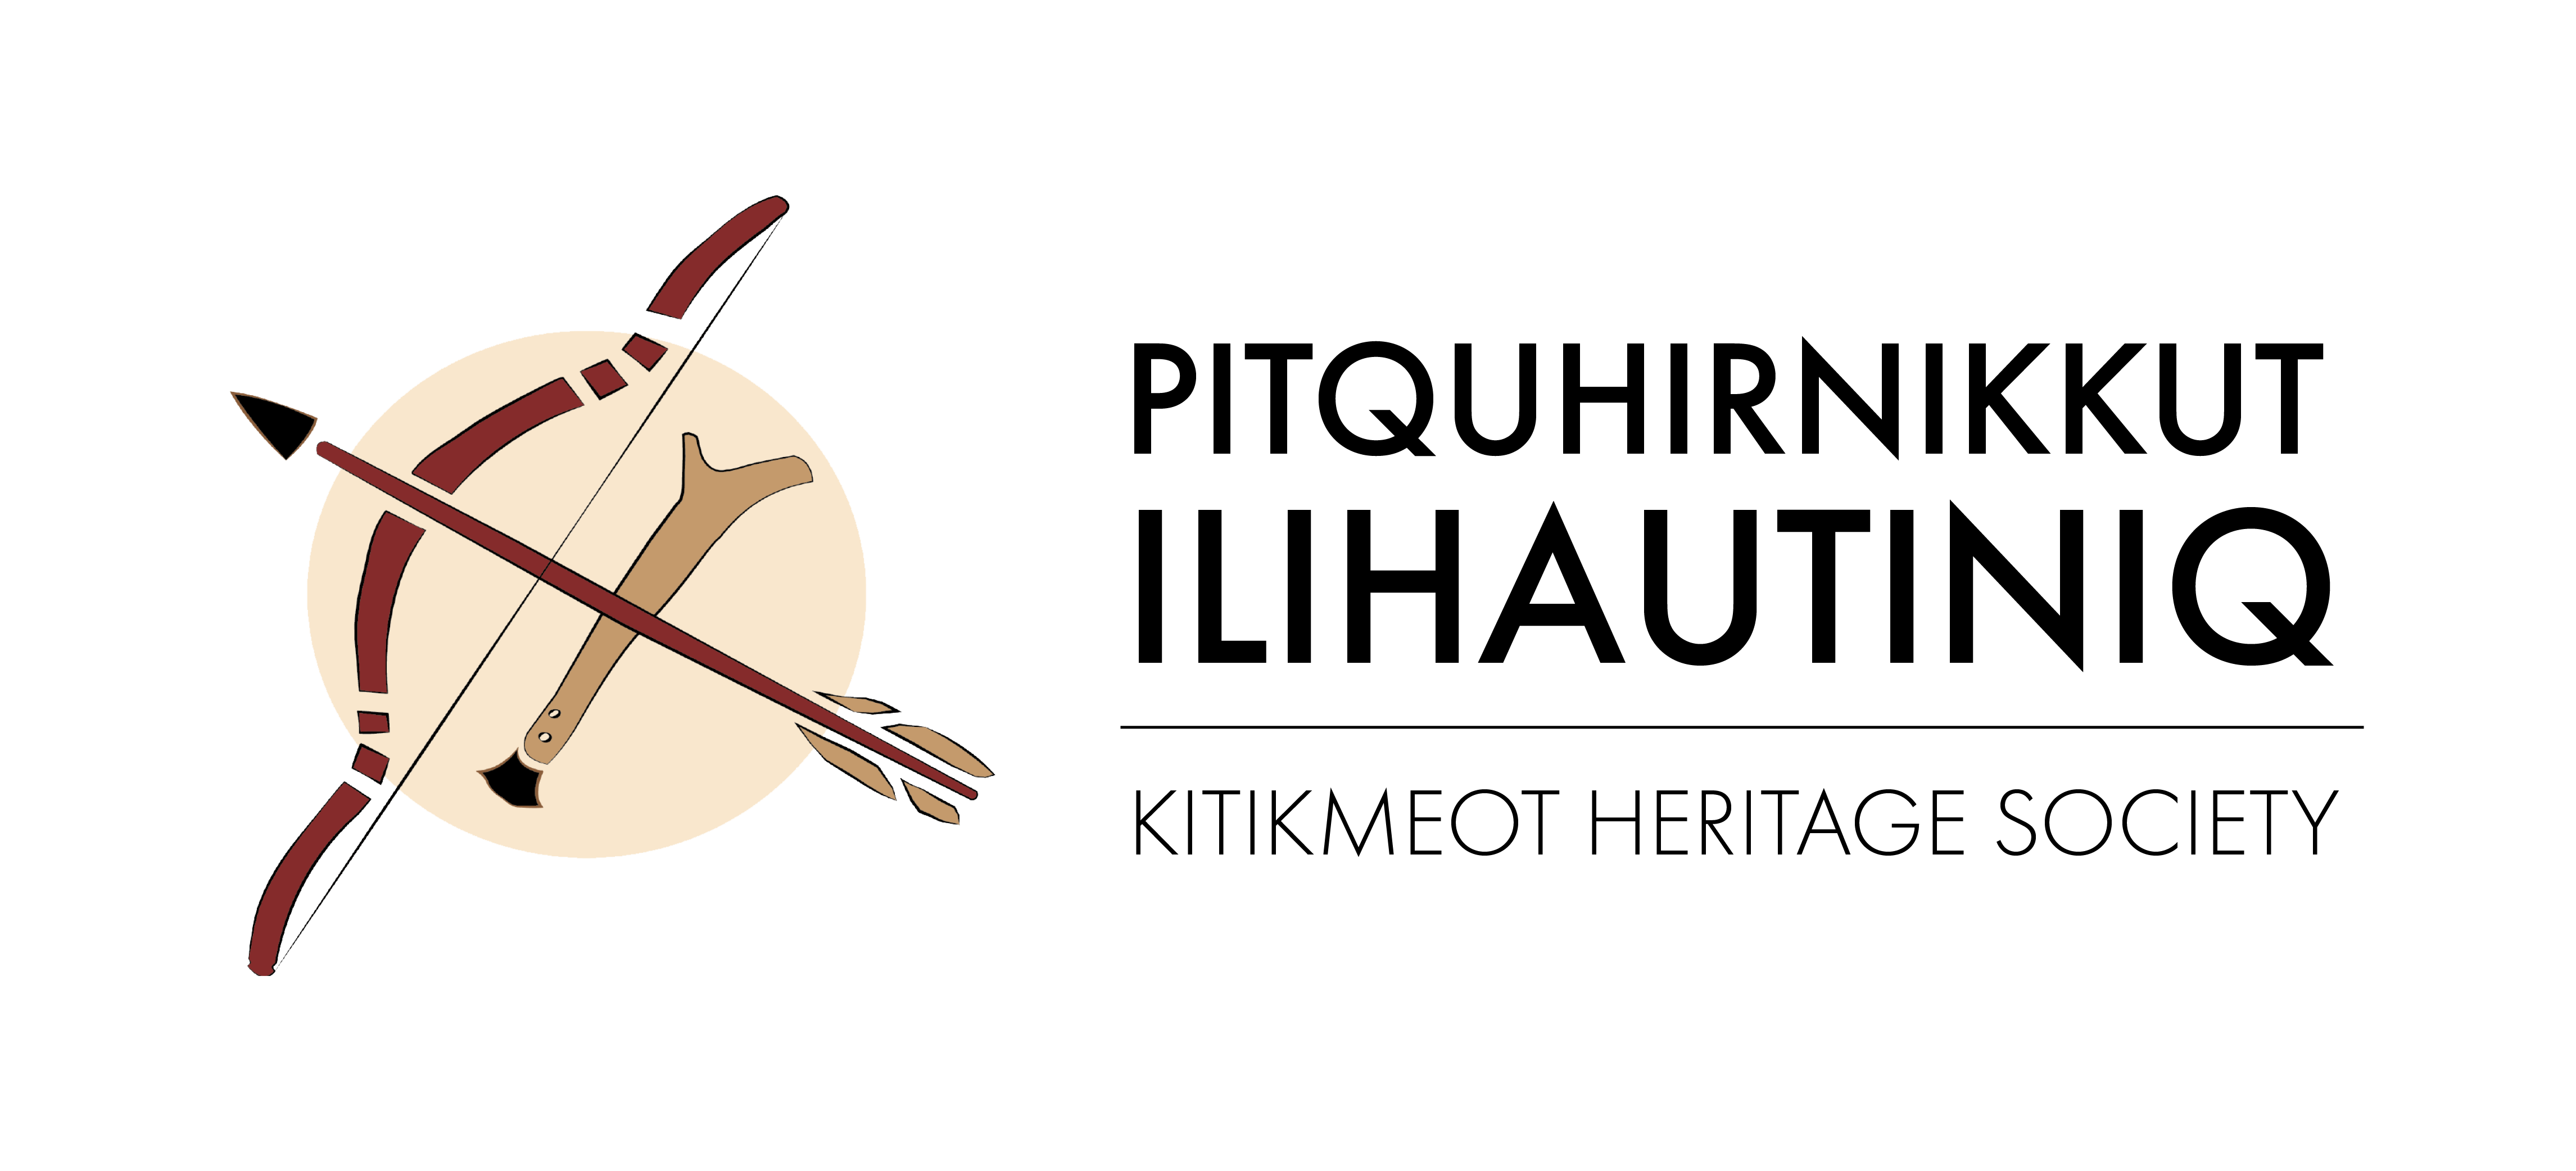 Pitquhirnikkut Ilihautiniq / Kitikmeot Heritage Society logo